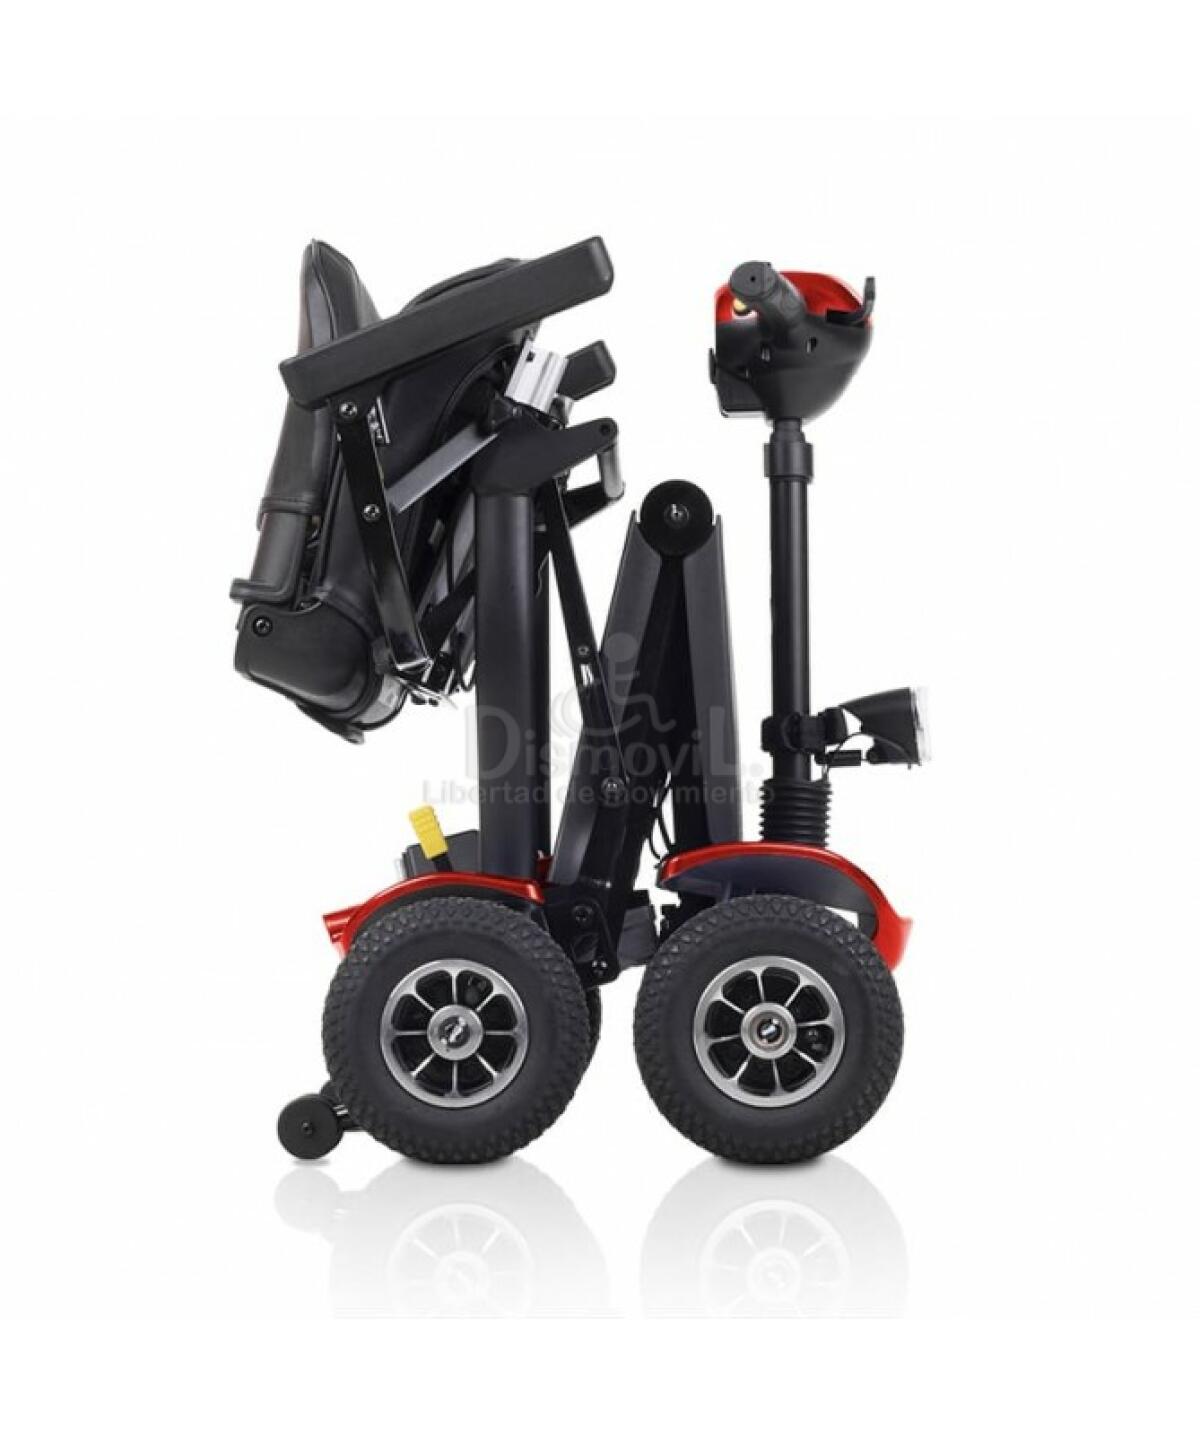 Scooter eléctrico plegable automático Scooter discapacitados